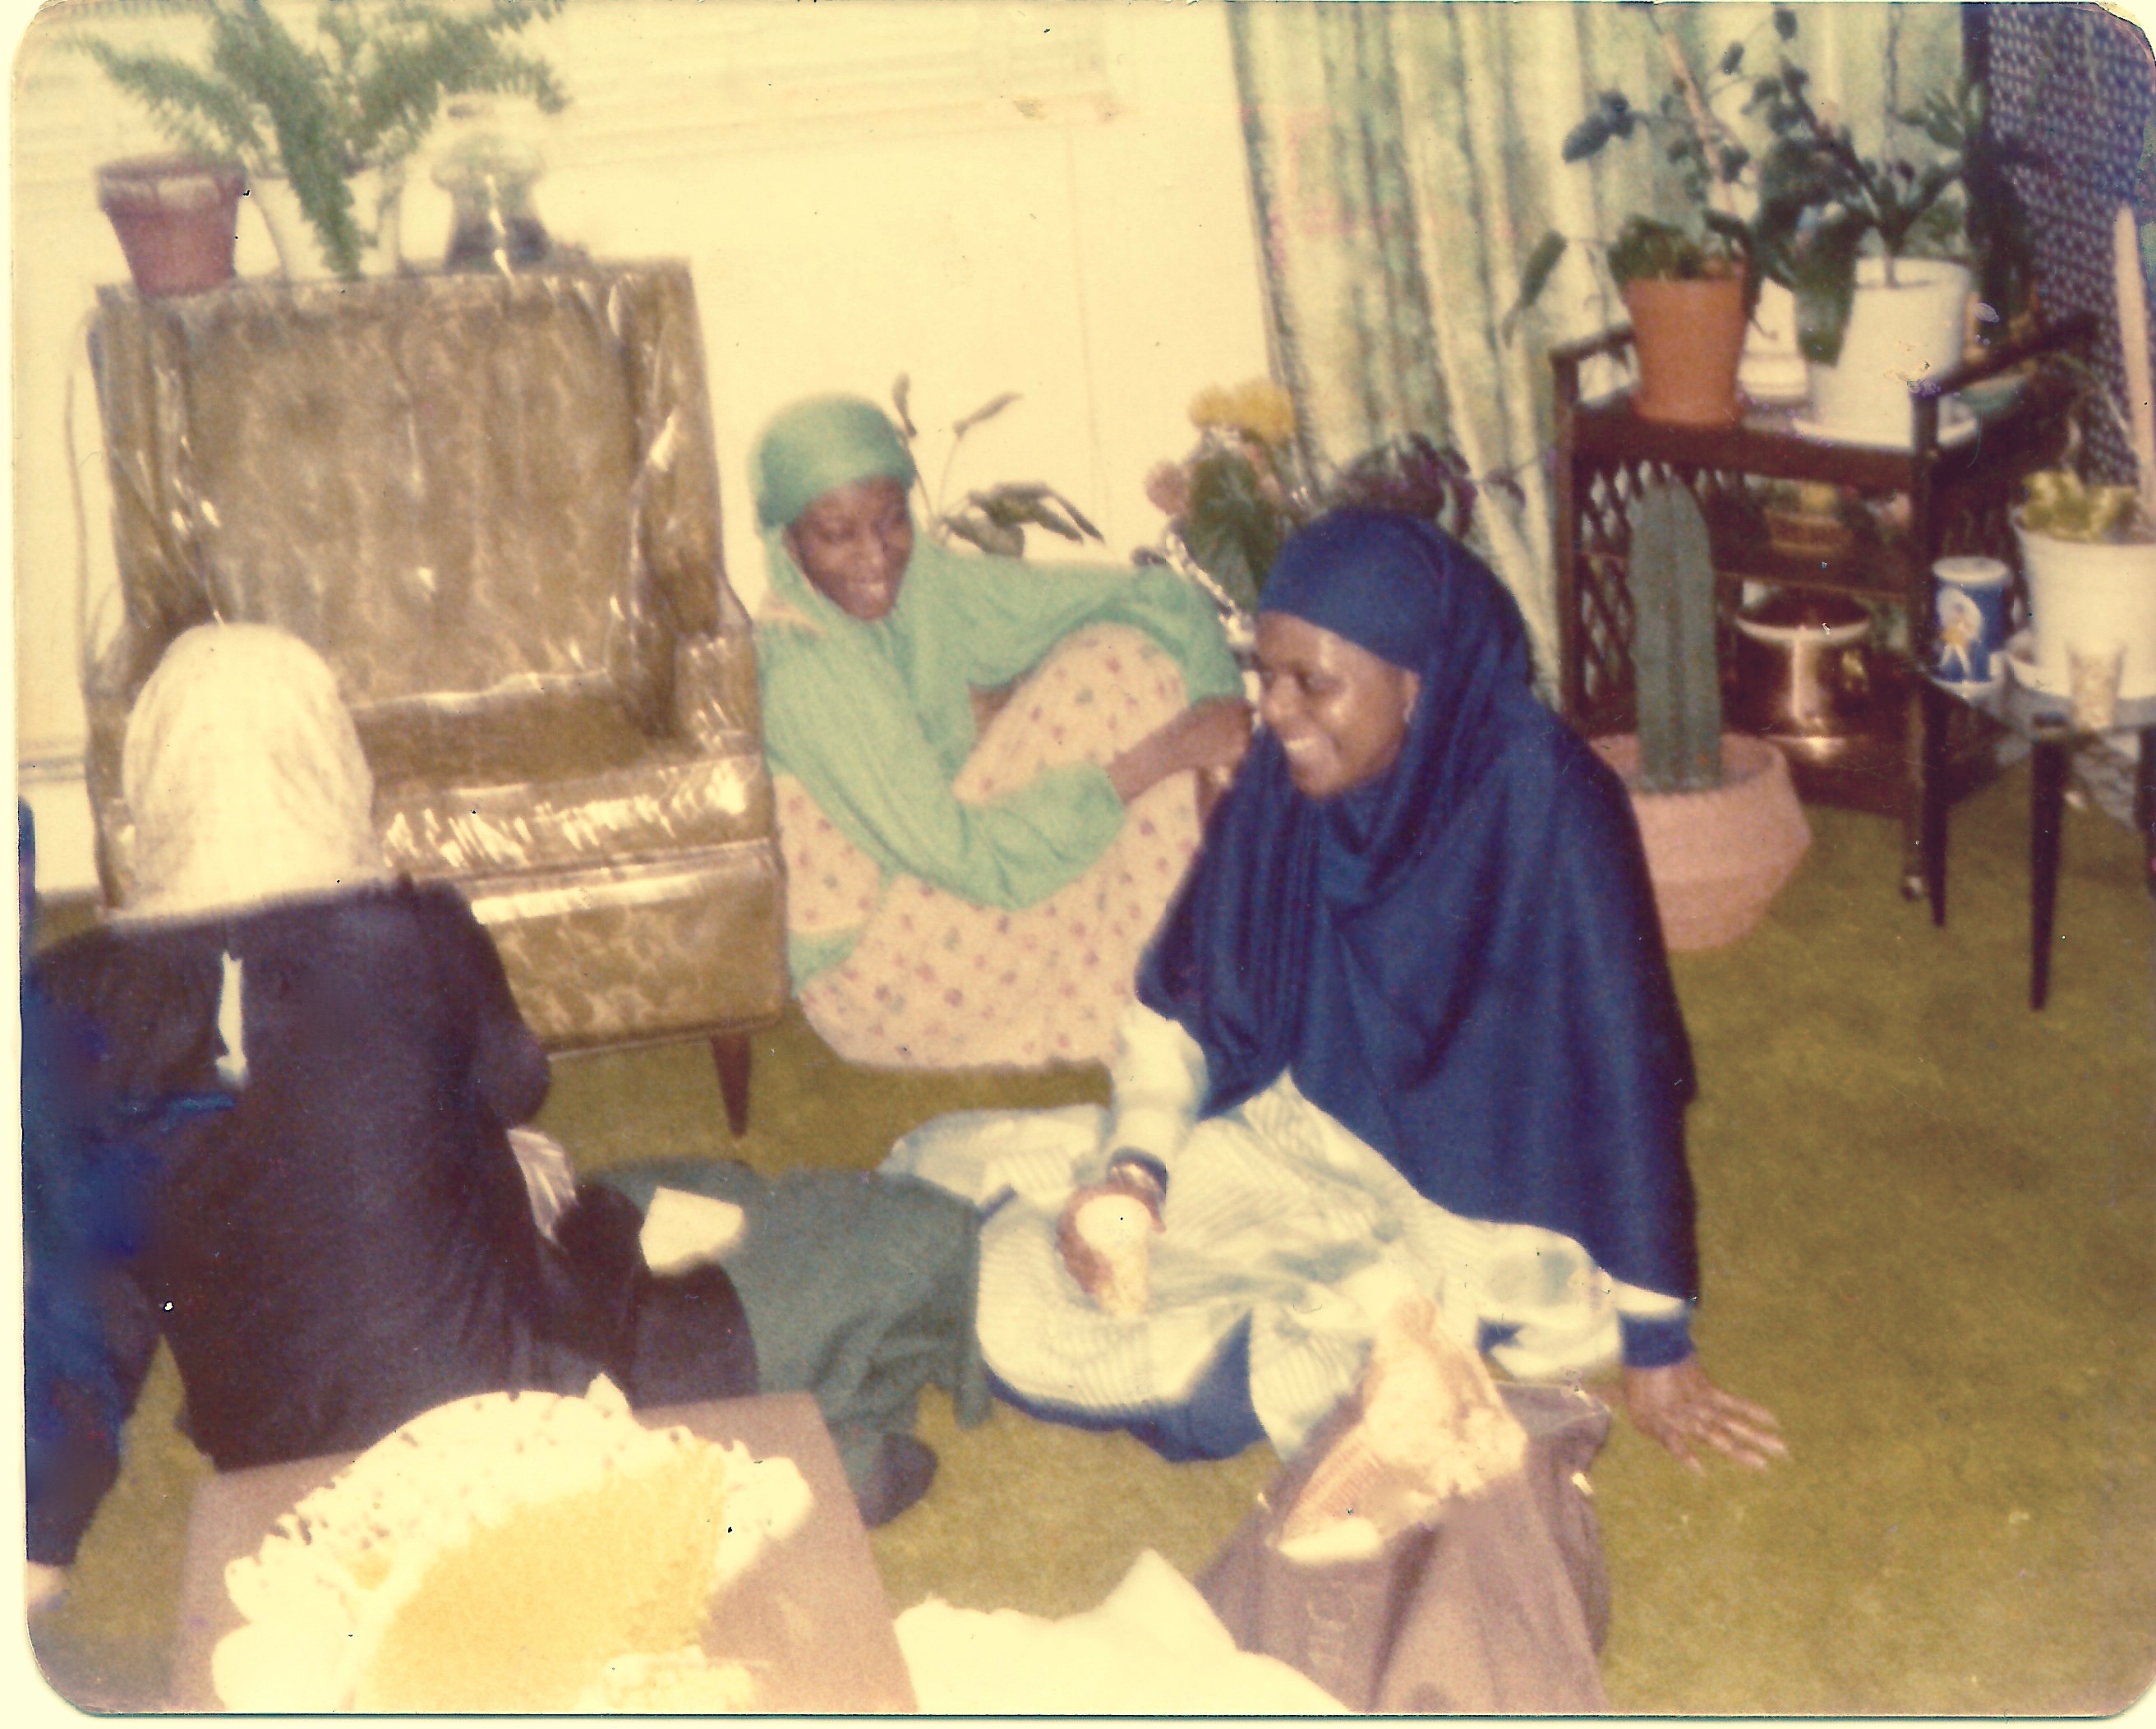 Muslim sisters’ gathering in the 1970s.